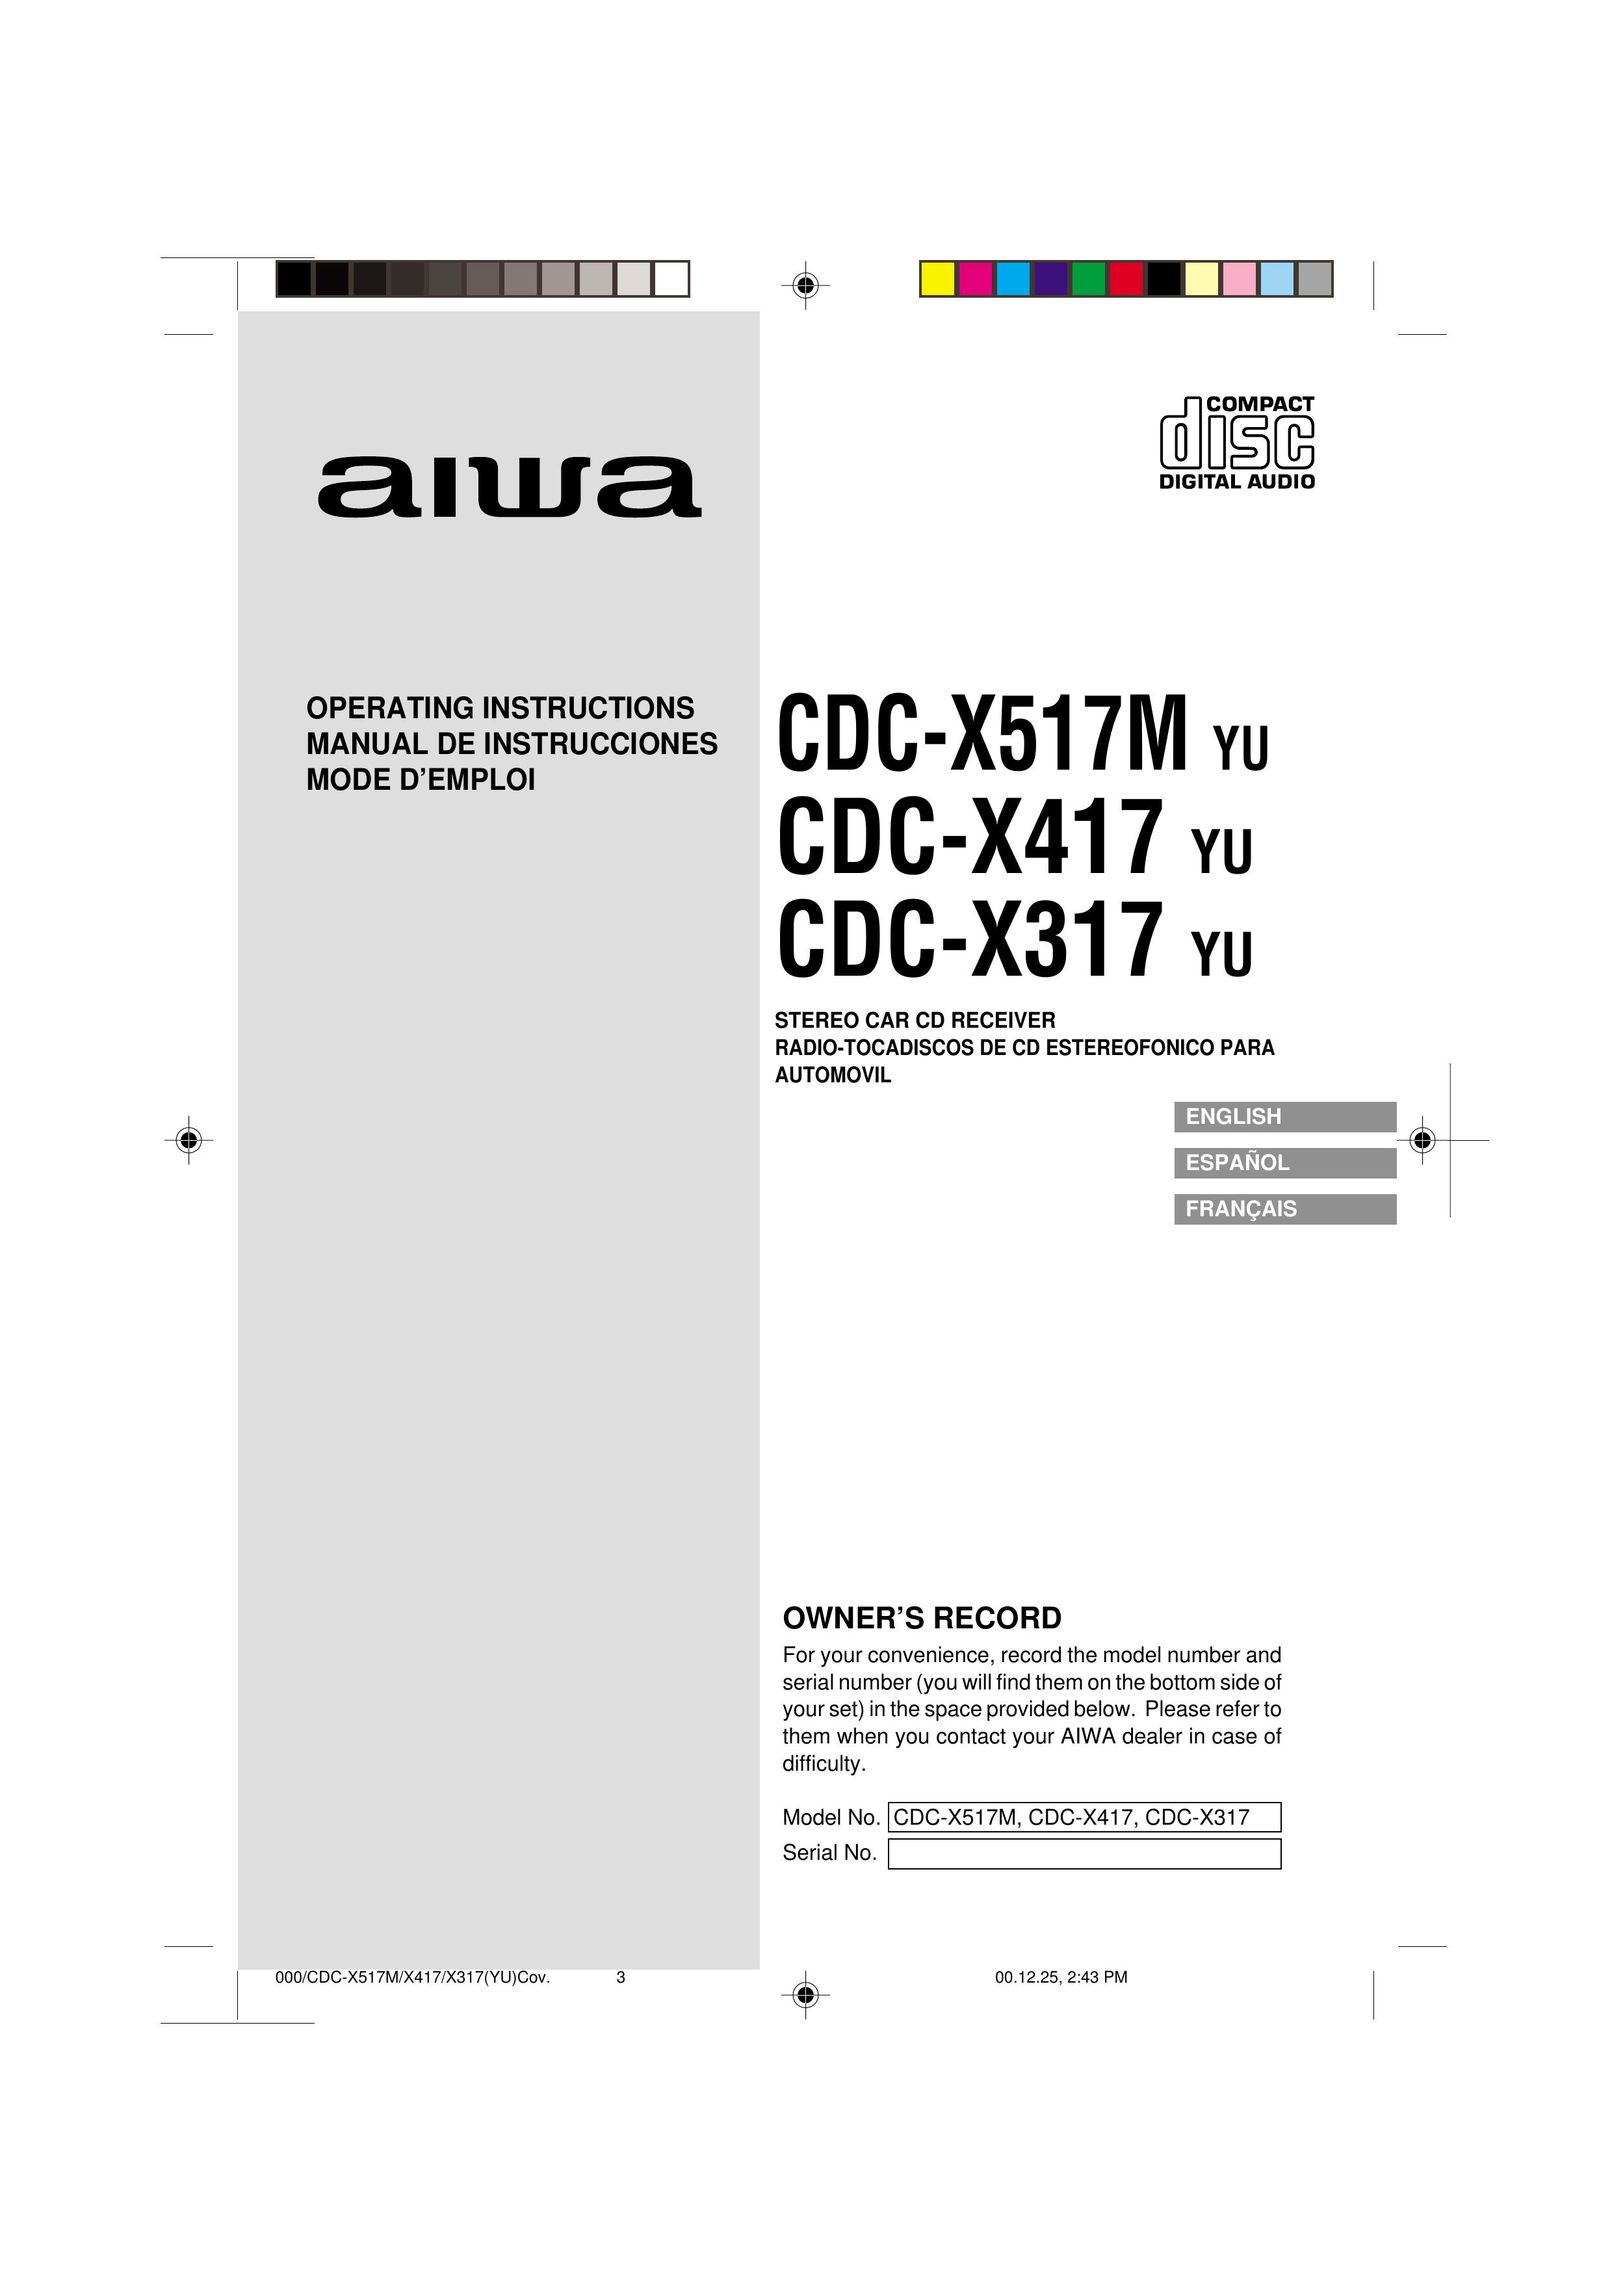 Aiwa CDC-X317 Car Stereo System User Manual